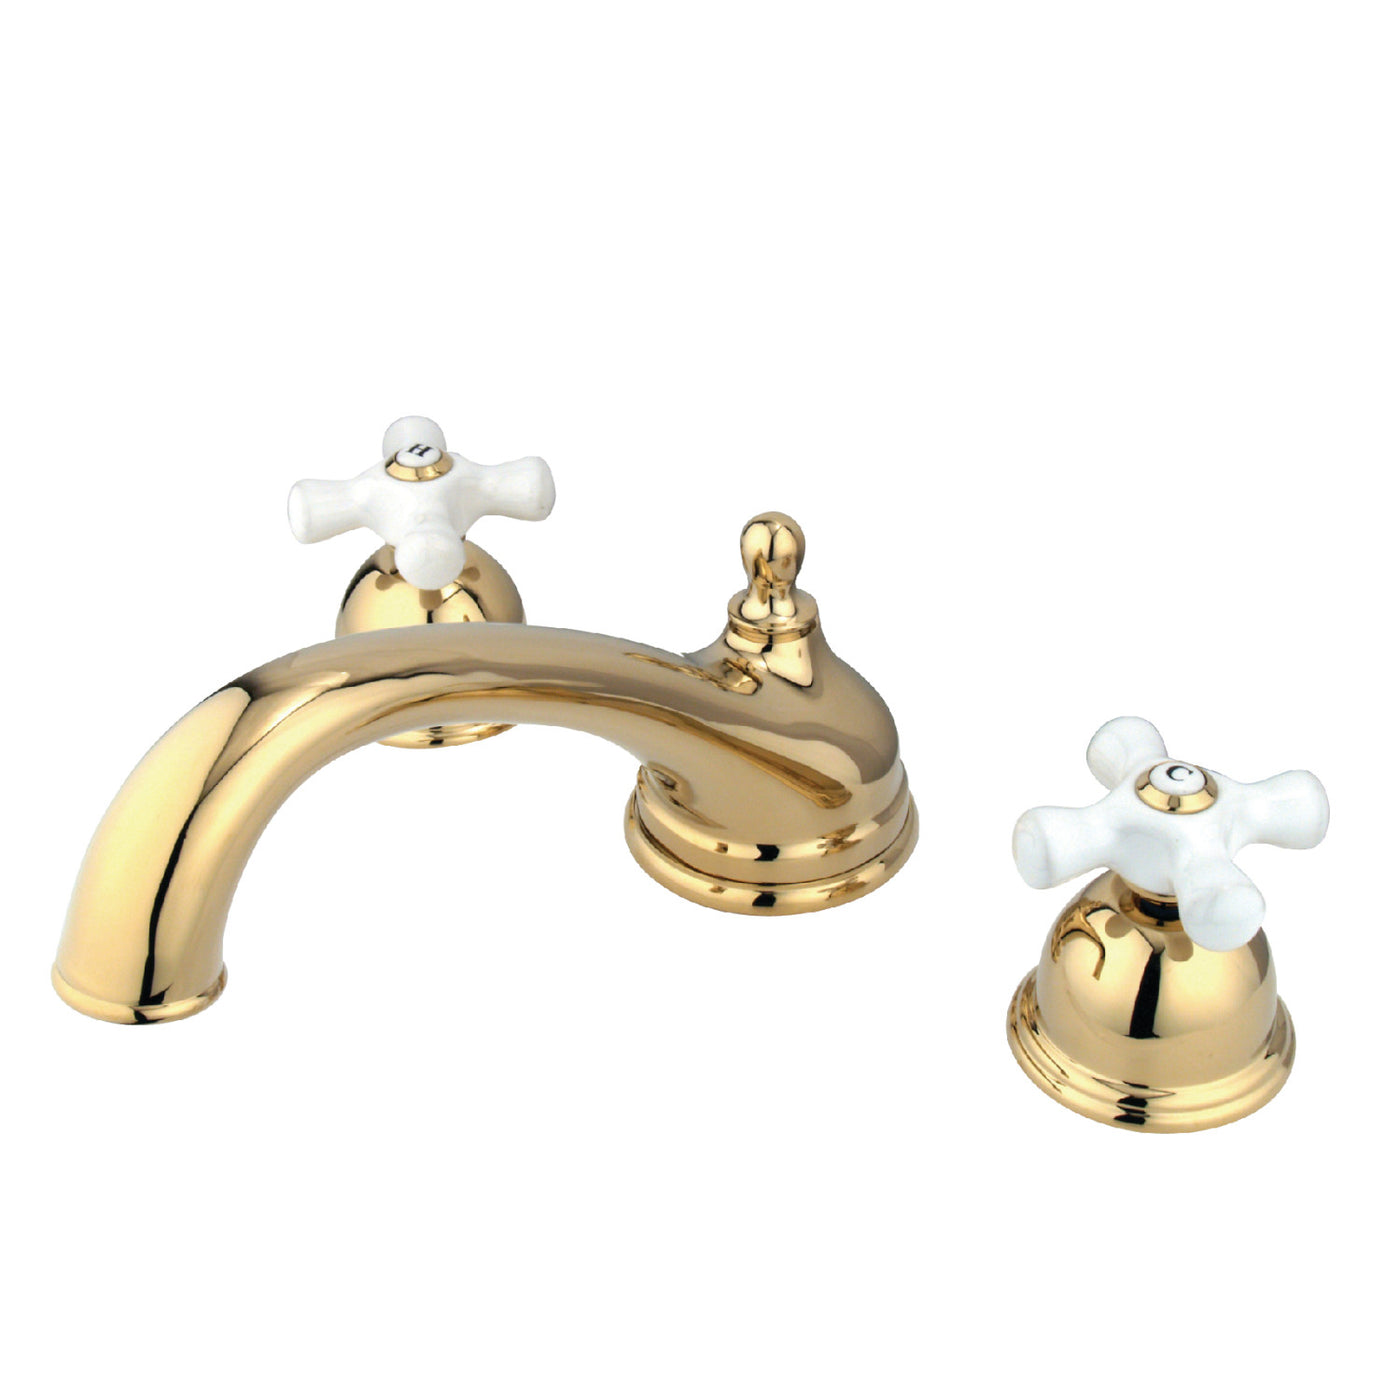 Elements of Design ES3352PX Roman Tub Faucet, Polished Brass